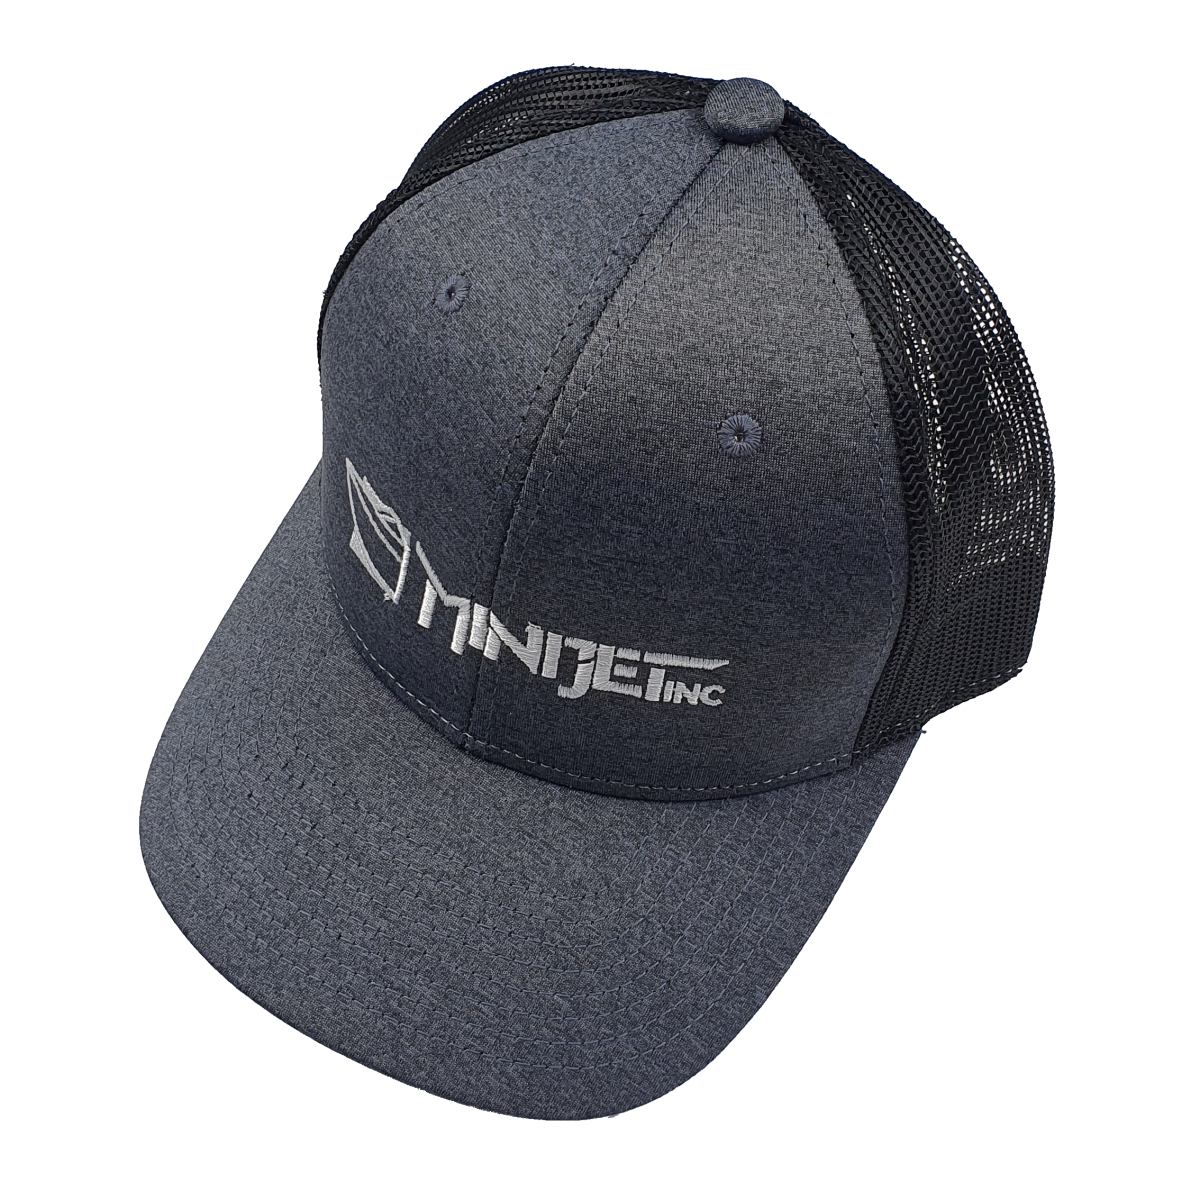 Minijet Hat Black back Charcoal Front White Logo